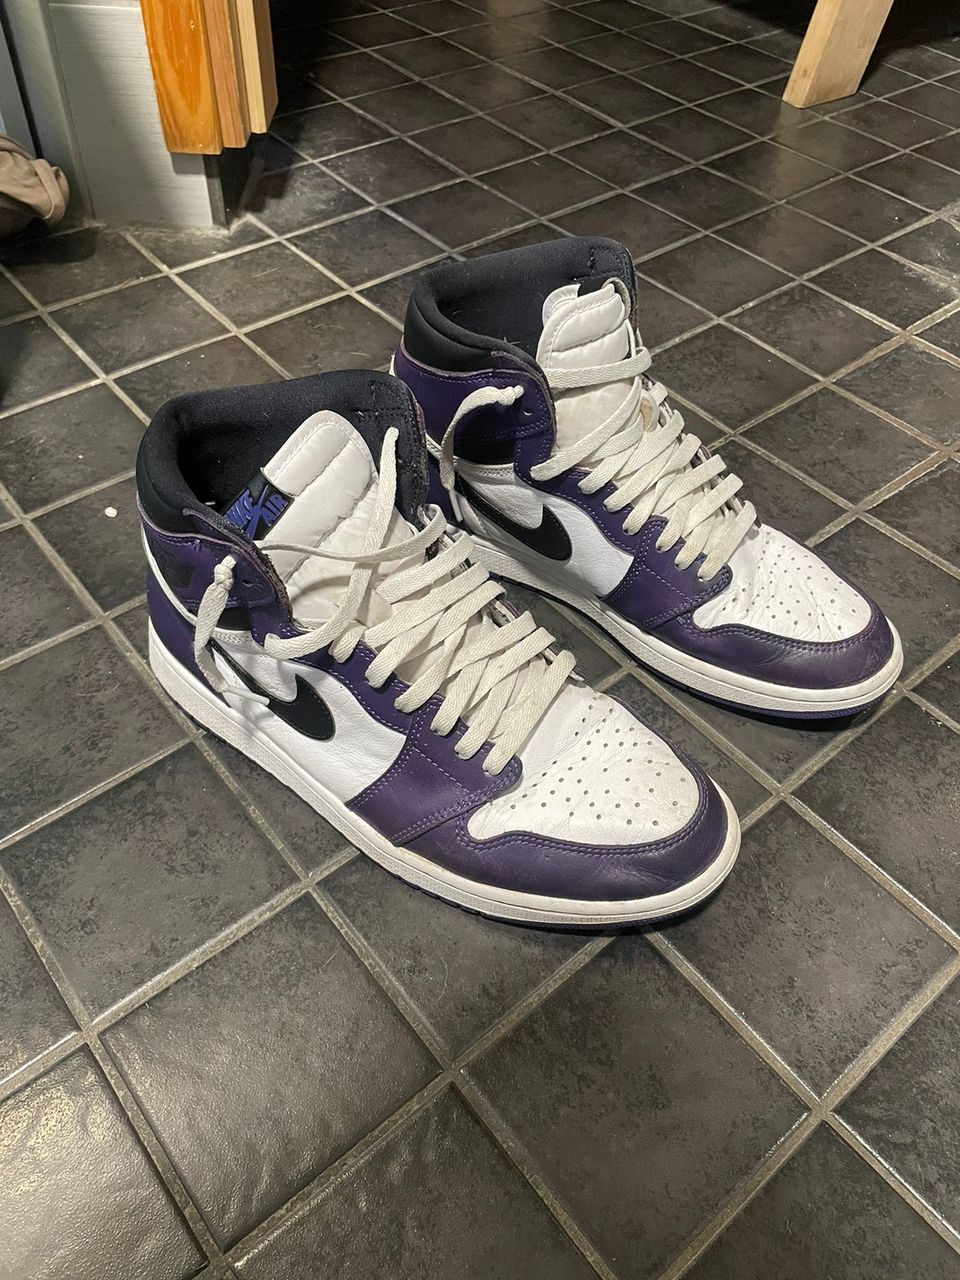 Air jordan 1 court purple 45